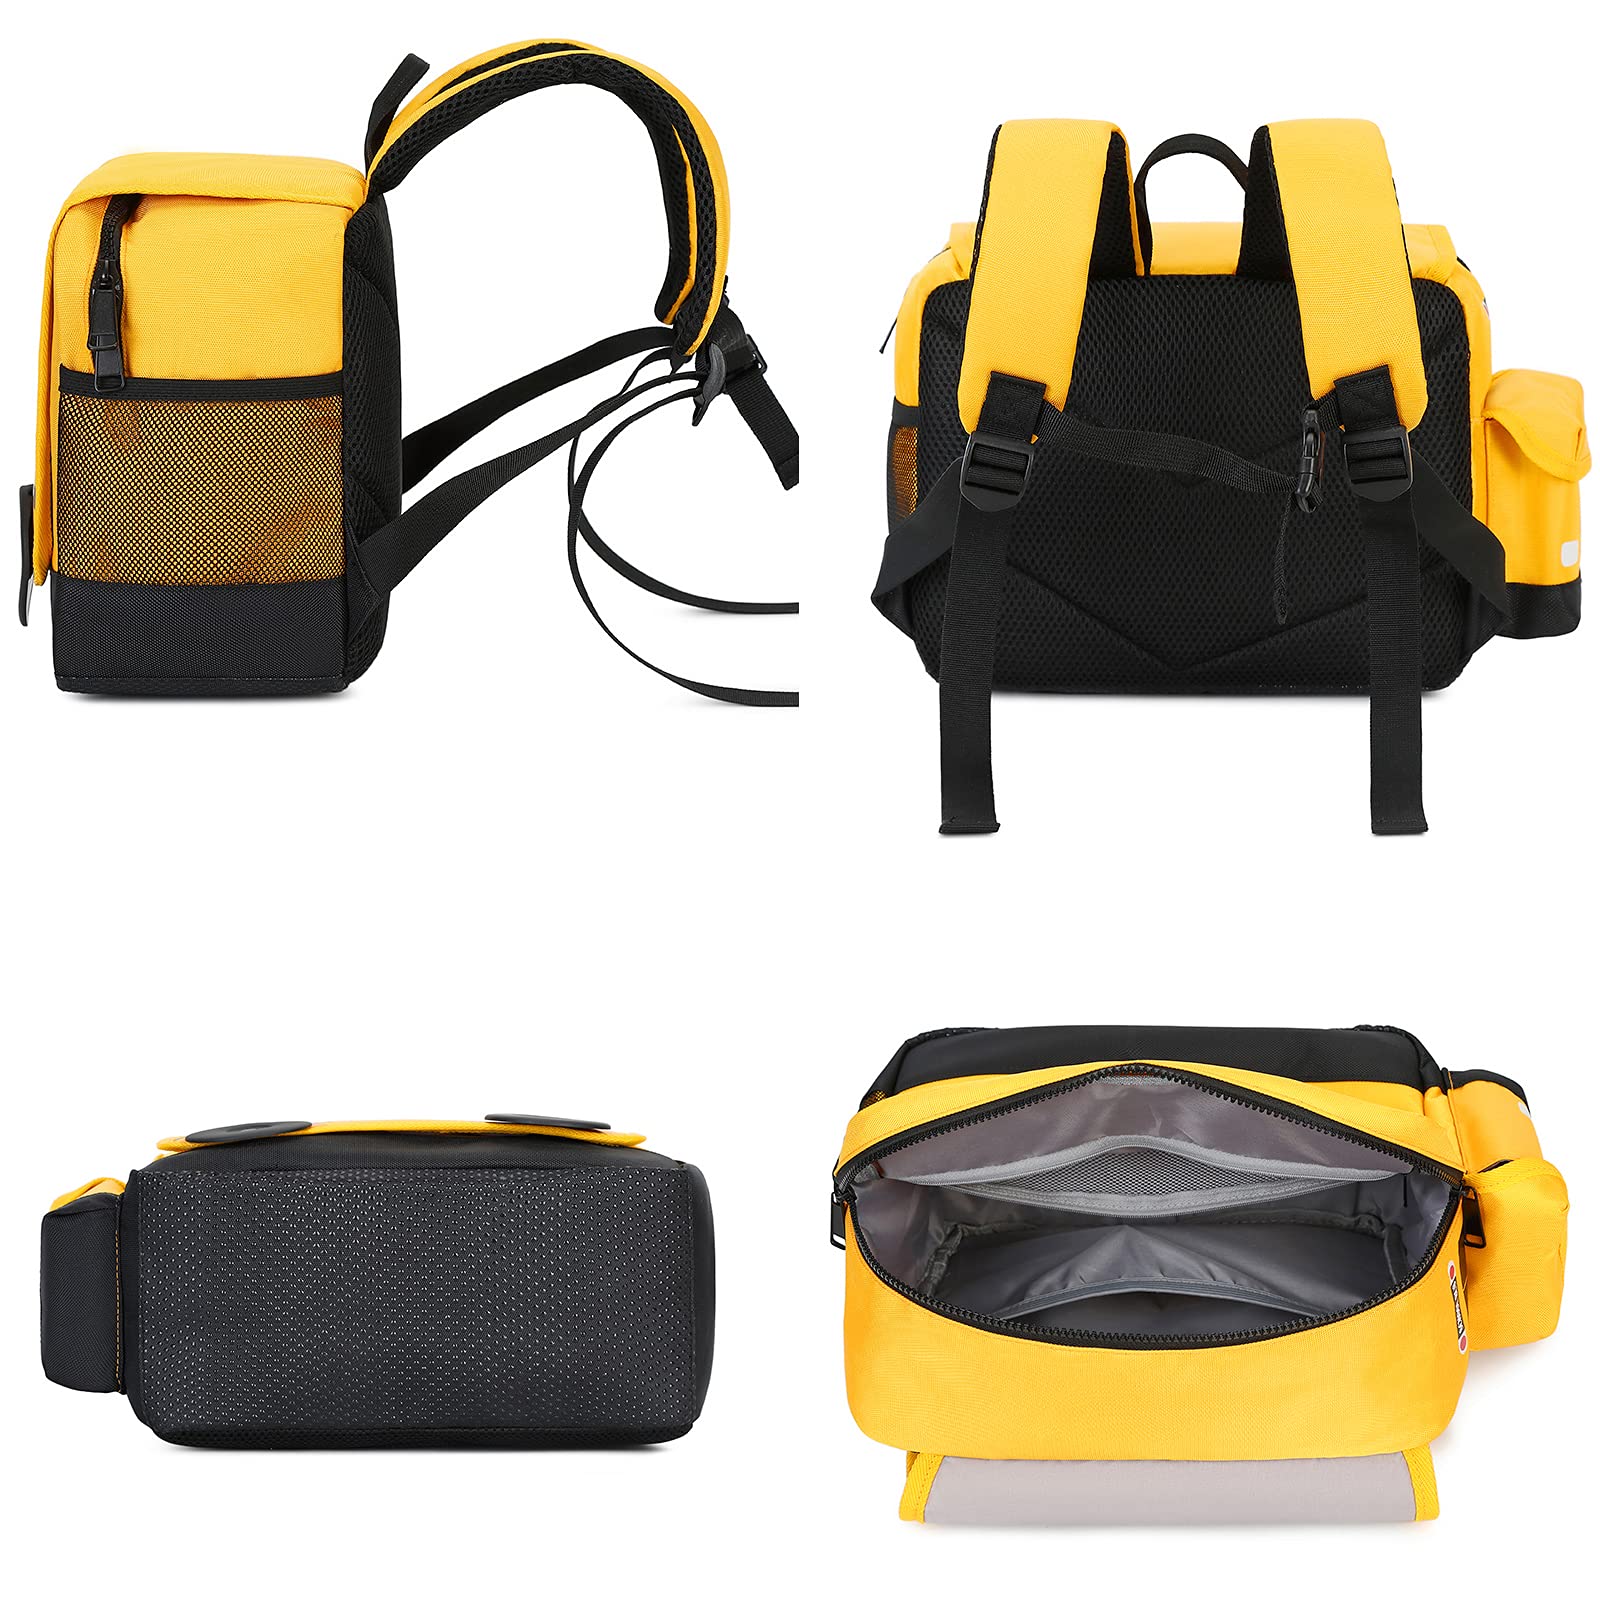 Toddler Backpack Boy Preschool School Bus Bookbag Kindergarten 3D Daycare Bags with Insulation Lunch Box